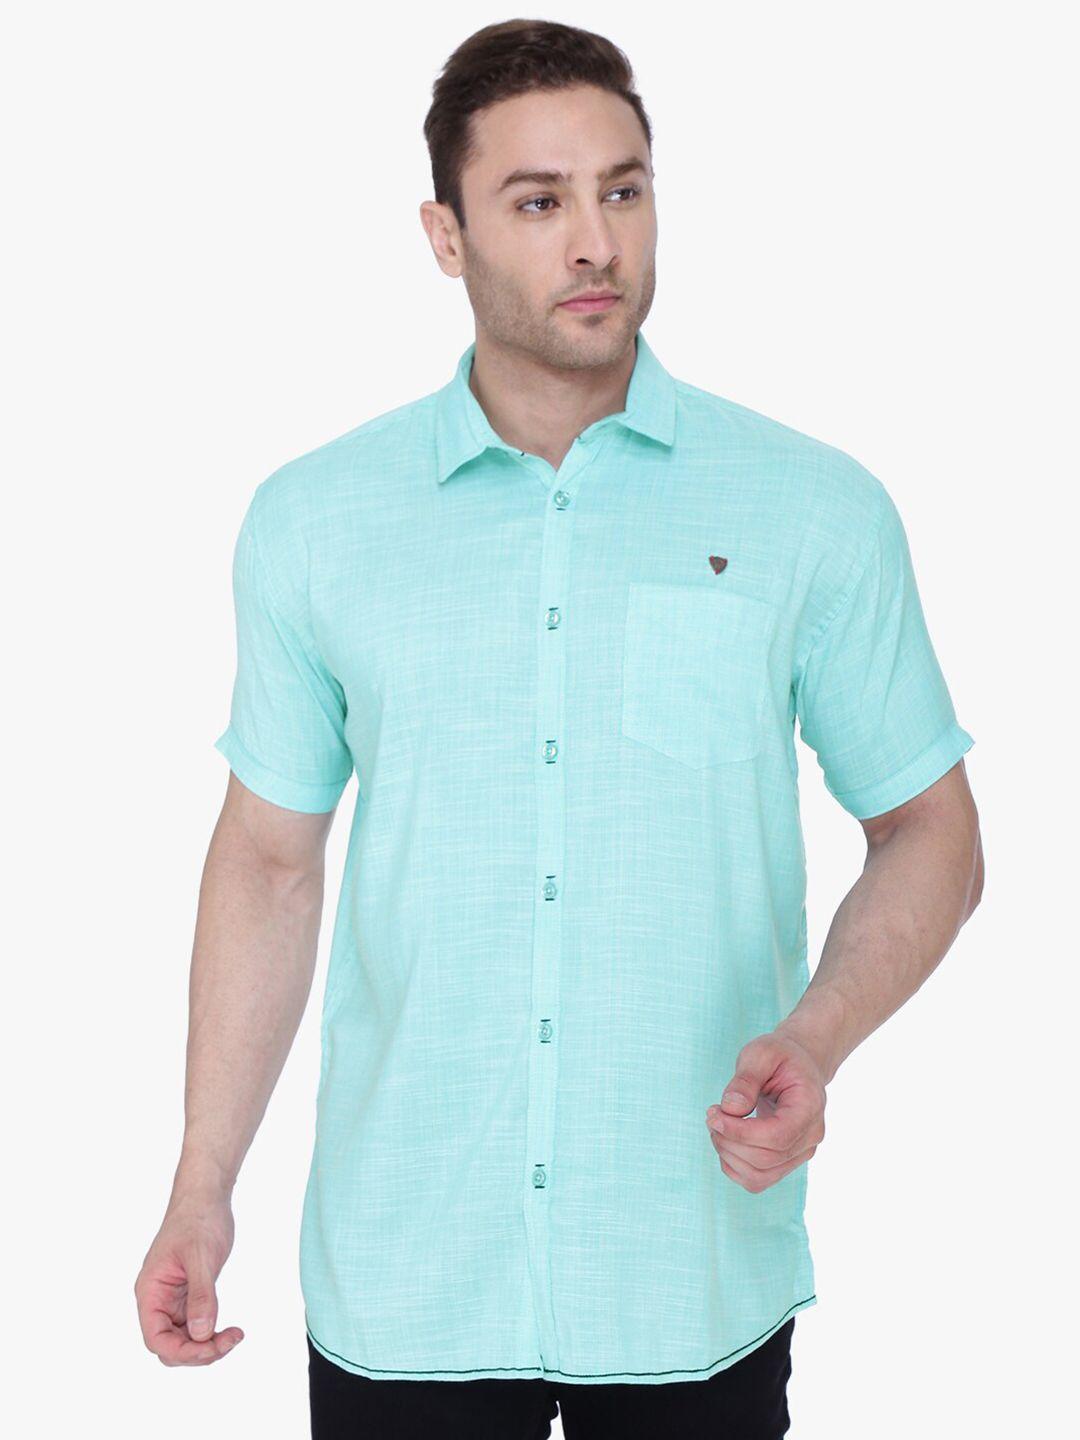 kuons avenue smart slim fit spread collar pocket casual shirt